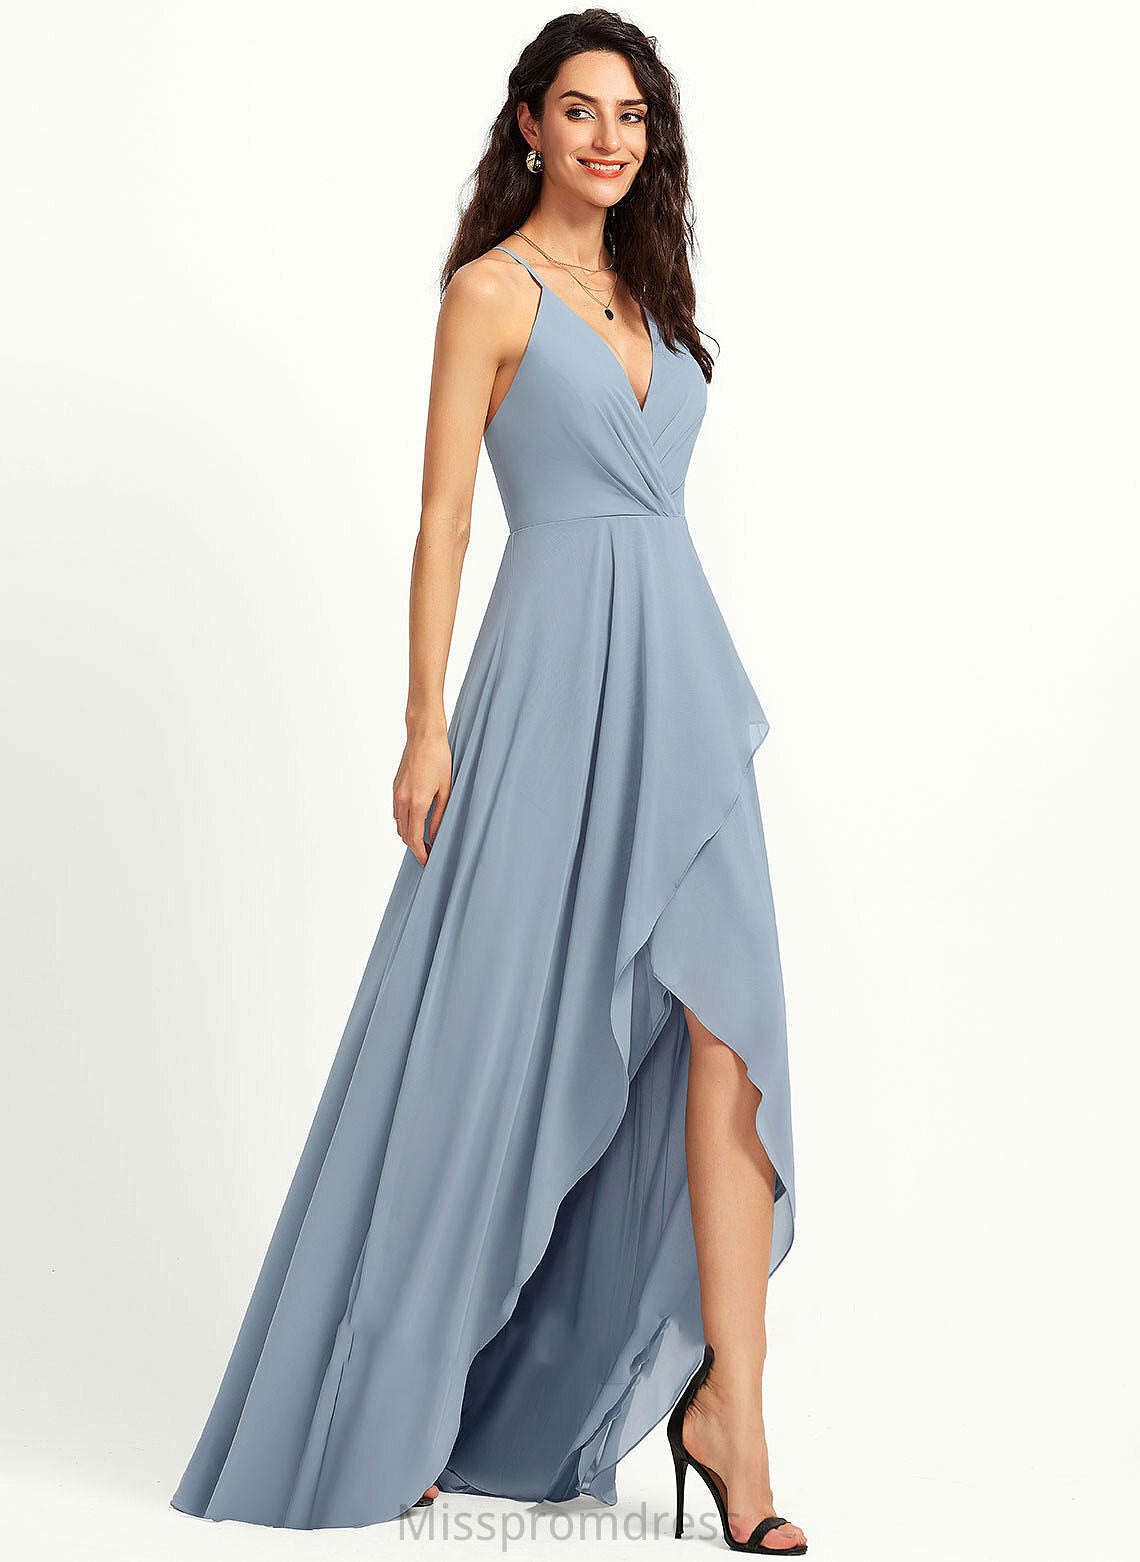 Silhouette Asymmetrical Straps Fabric Length A-Line V-neck Neckline Laney Sleeveless Floor Length Natural Waist Bridesmaid Dresses